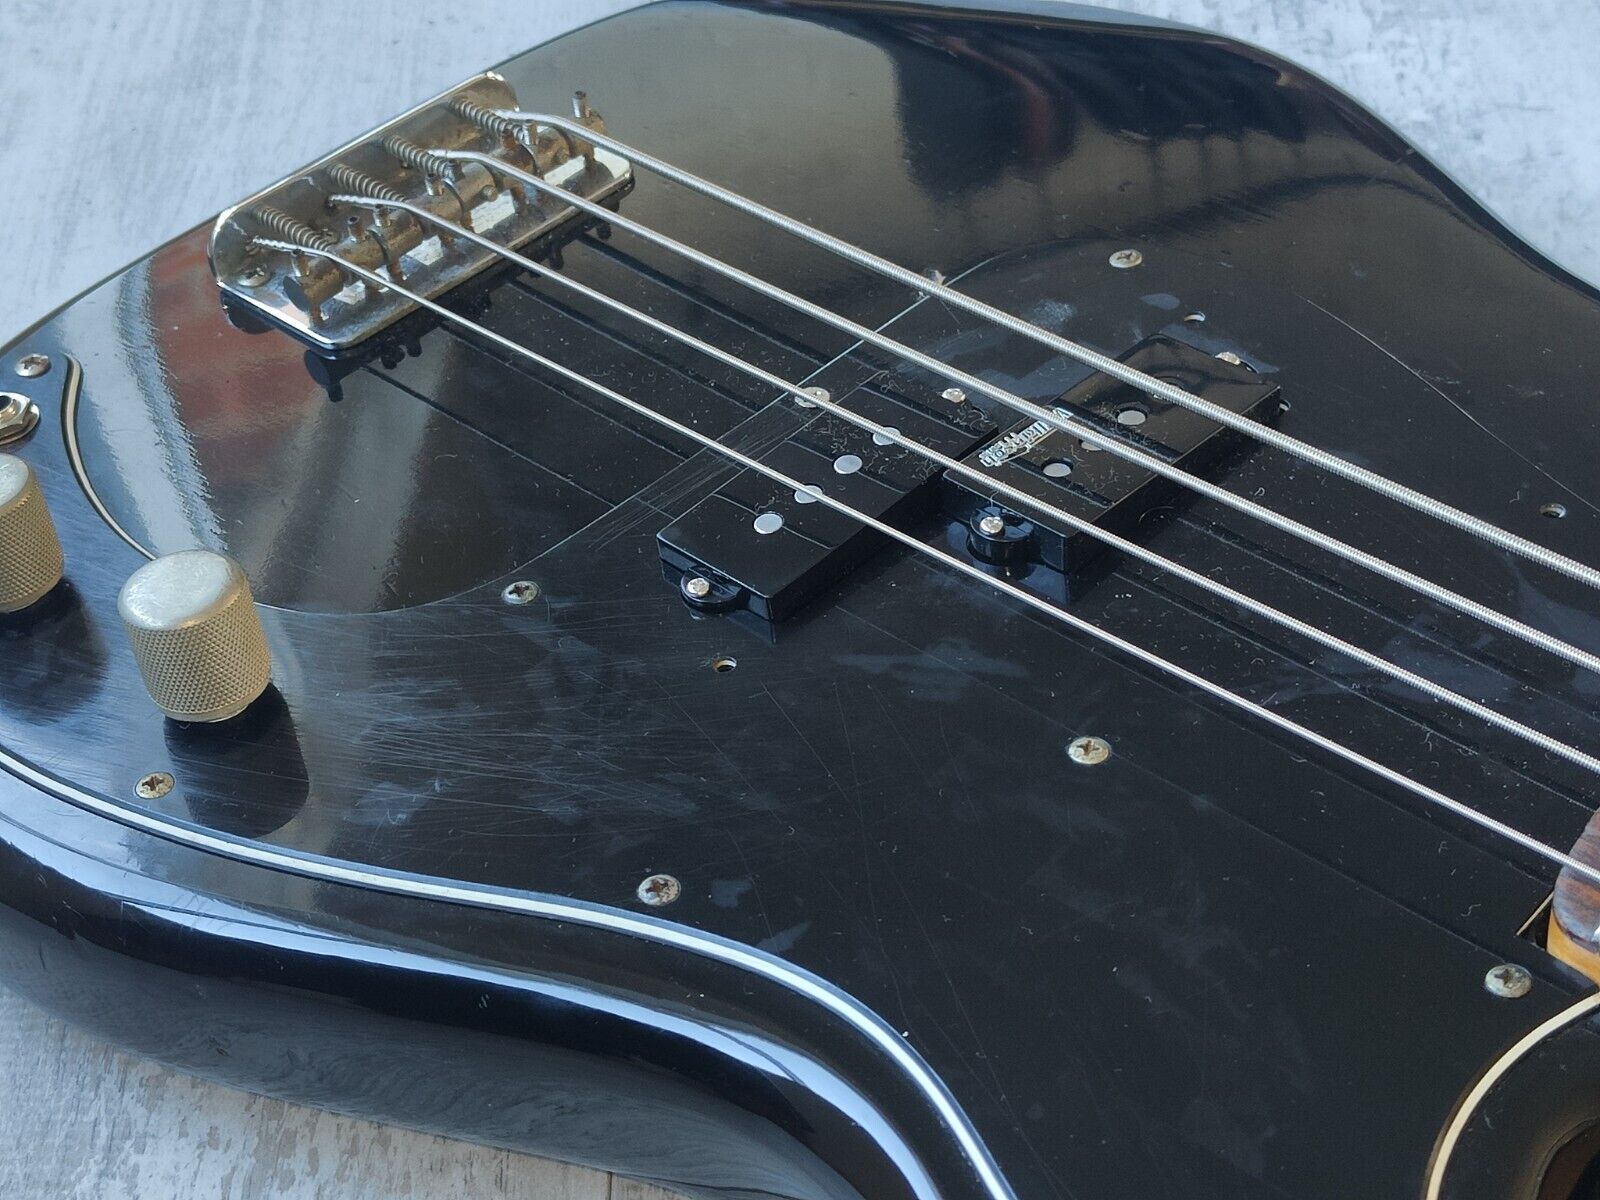 1981 Tokai Japan PB-40 Hard Puncher Precision Bass (Black)